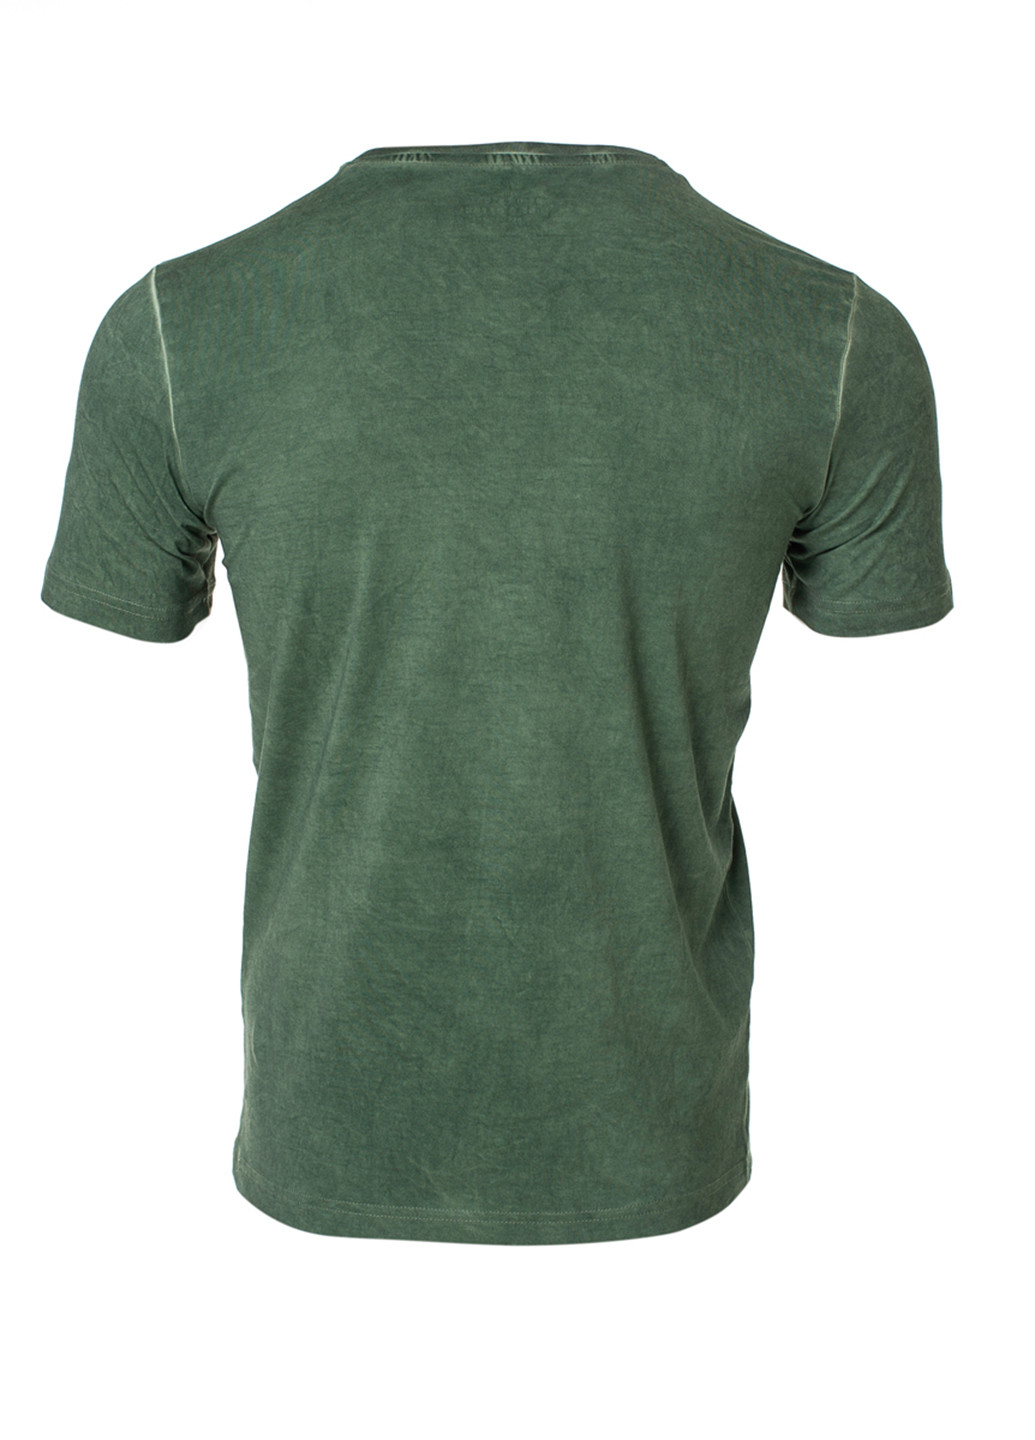 Хаки (оливковая) футболка Pierre Cardin